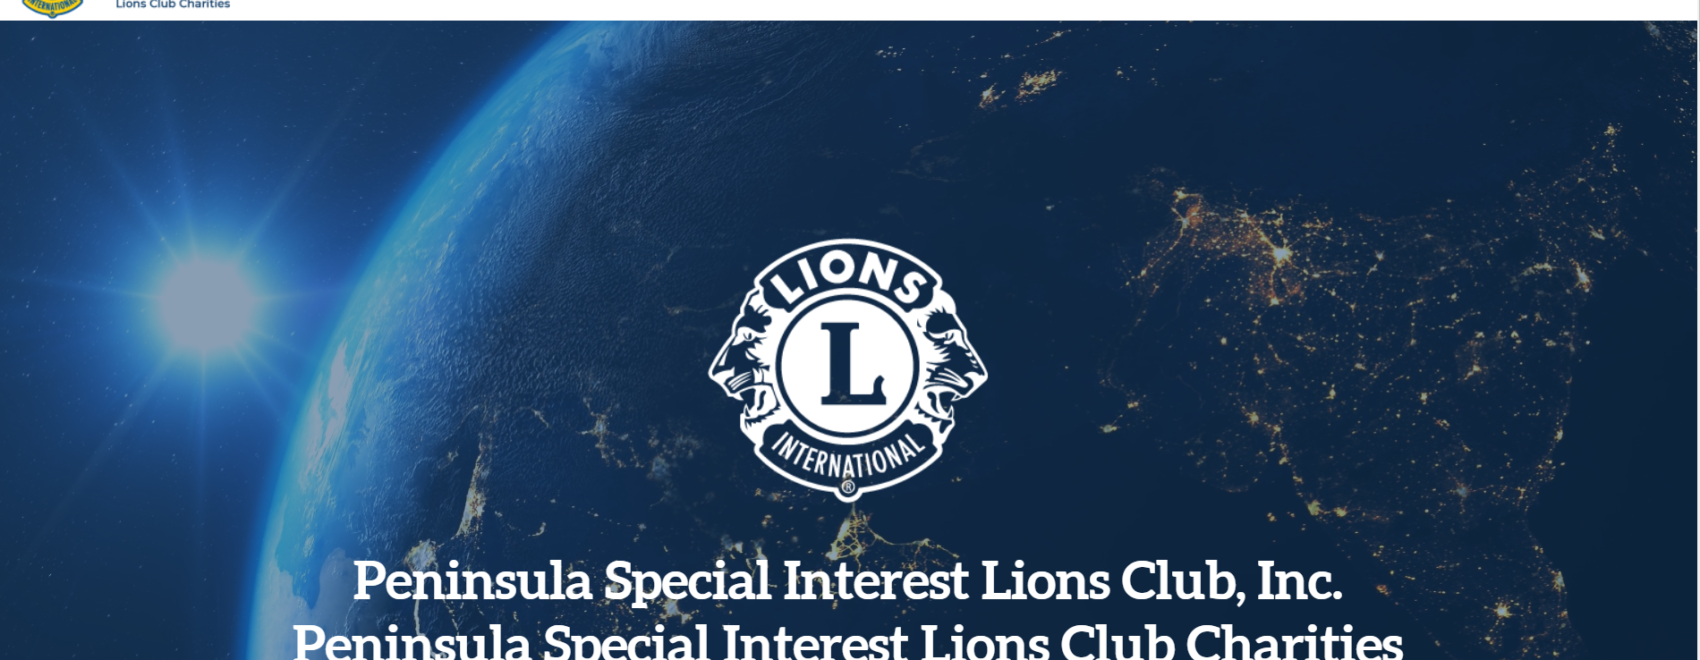 Lions Club Homepage screen cap